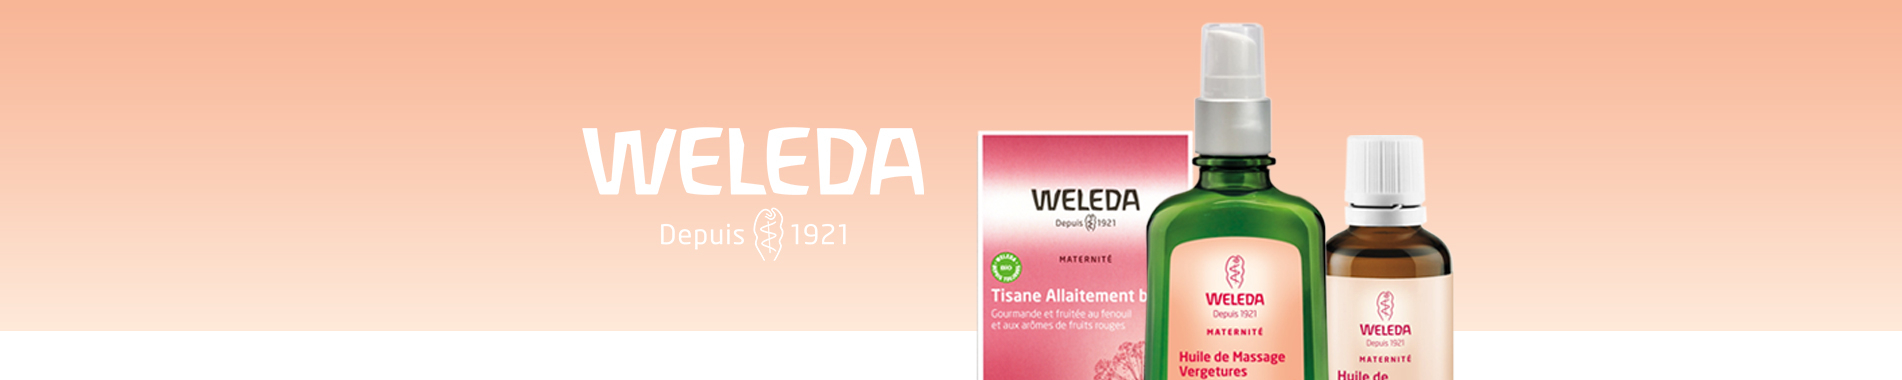 Weleda Tisane Allaitement Bio 2X20 sachets